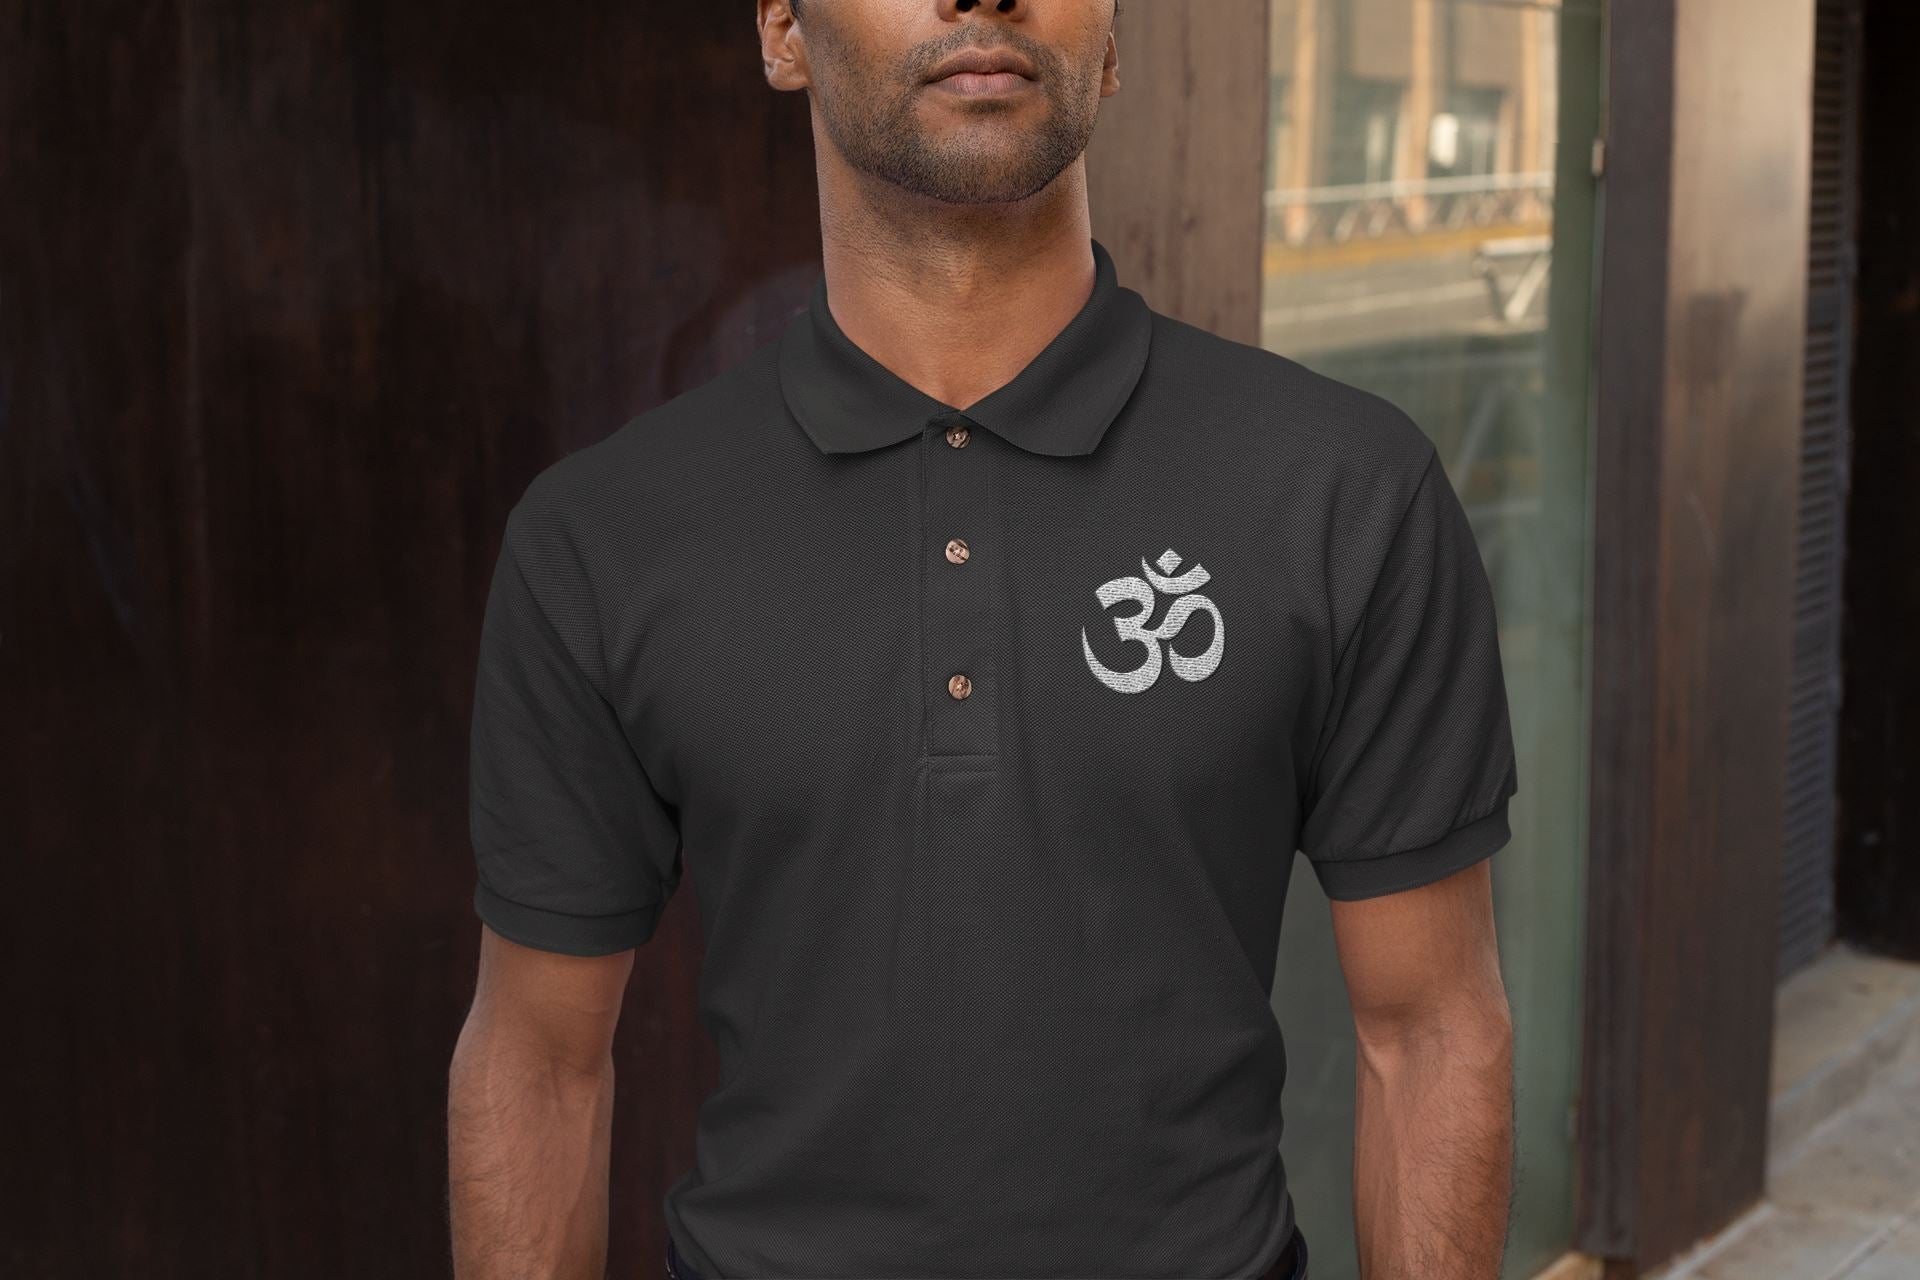 Aum Exclusive Spiritual Black Polo T Shirt for Men Shirts & Tops Printrove 